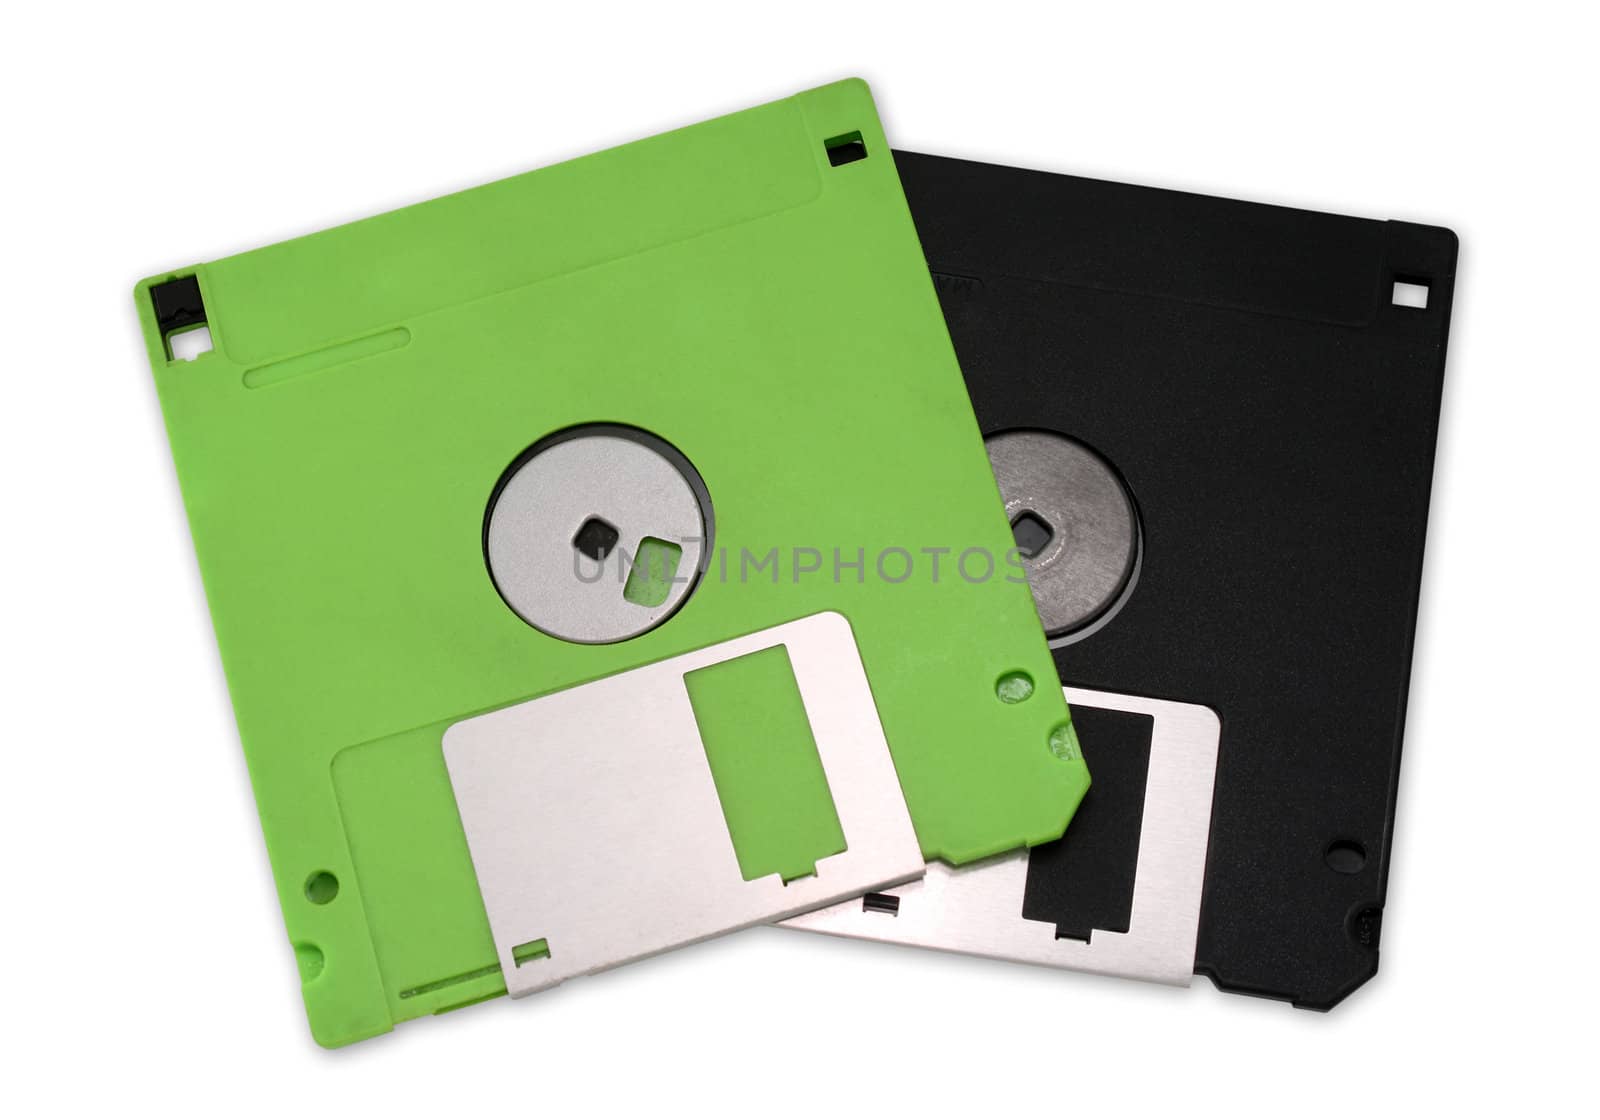 Floppy disks isolated on white background